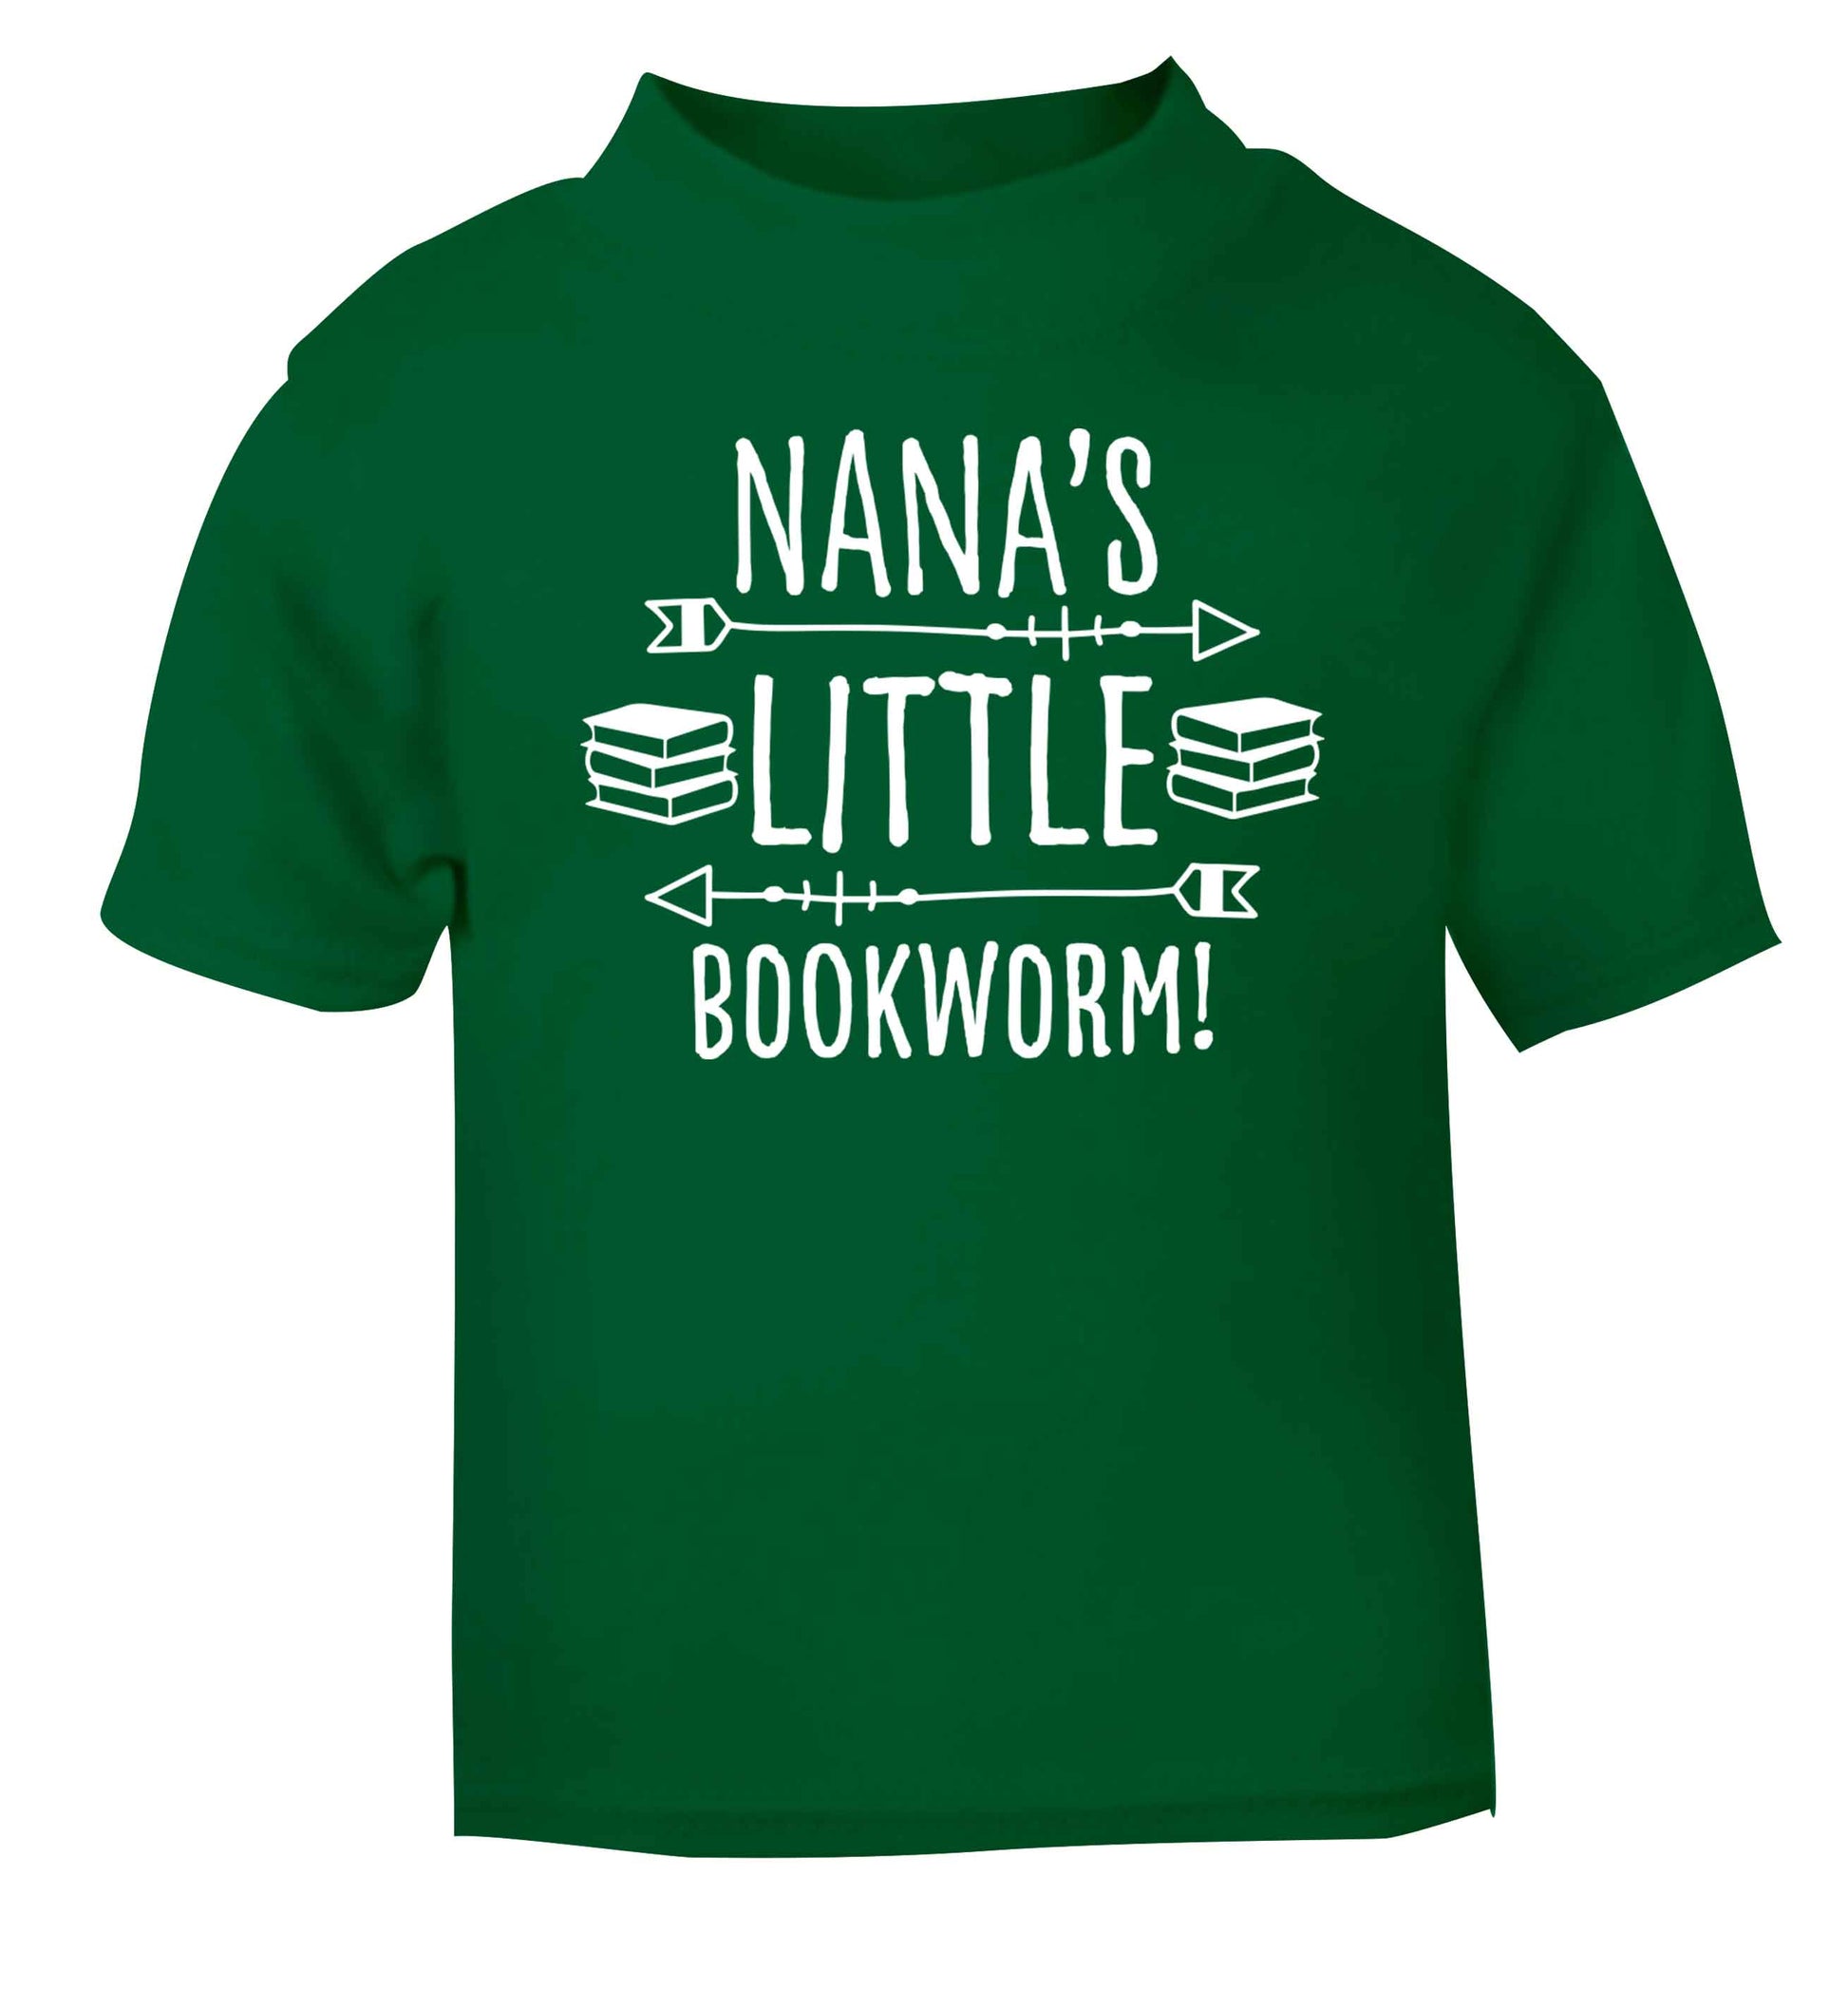 Nana's little bookworm green baby toddler Tshirt 2 Years